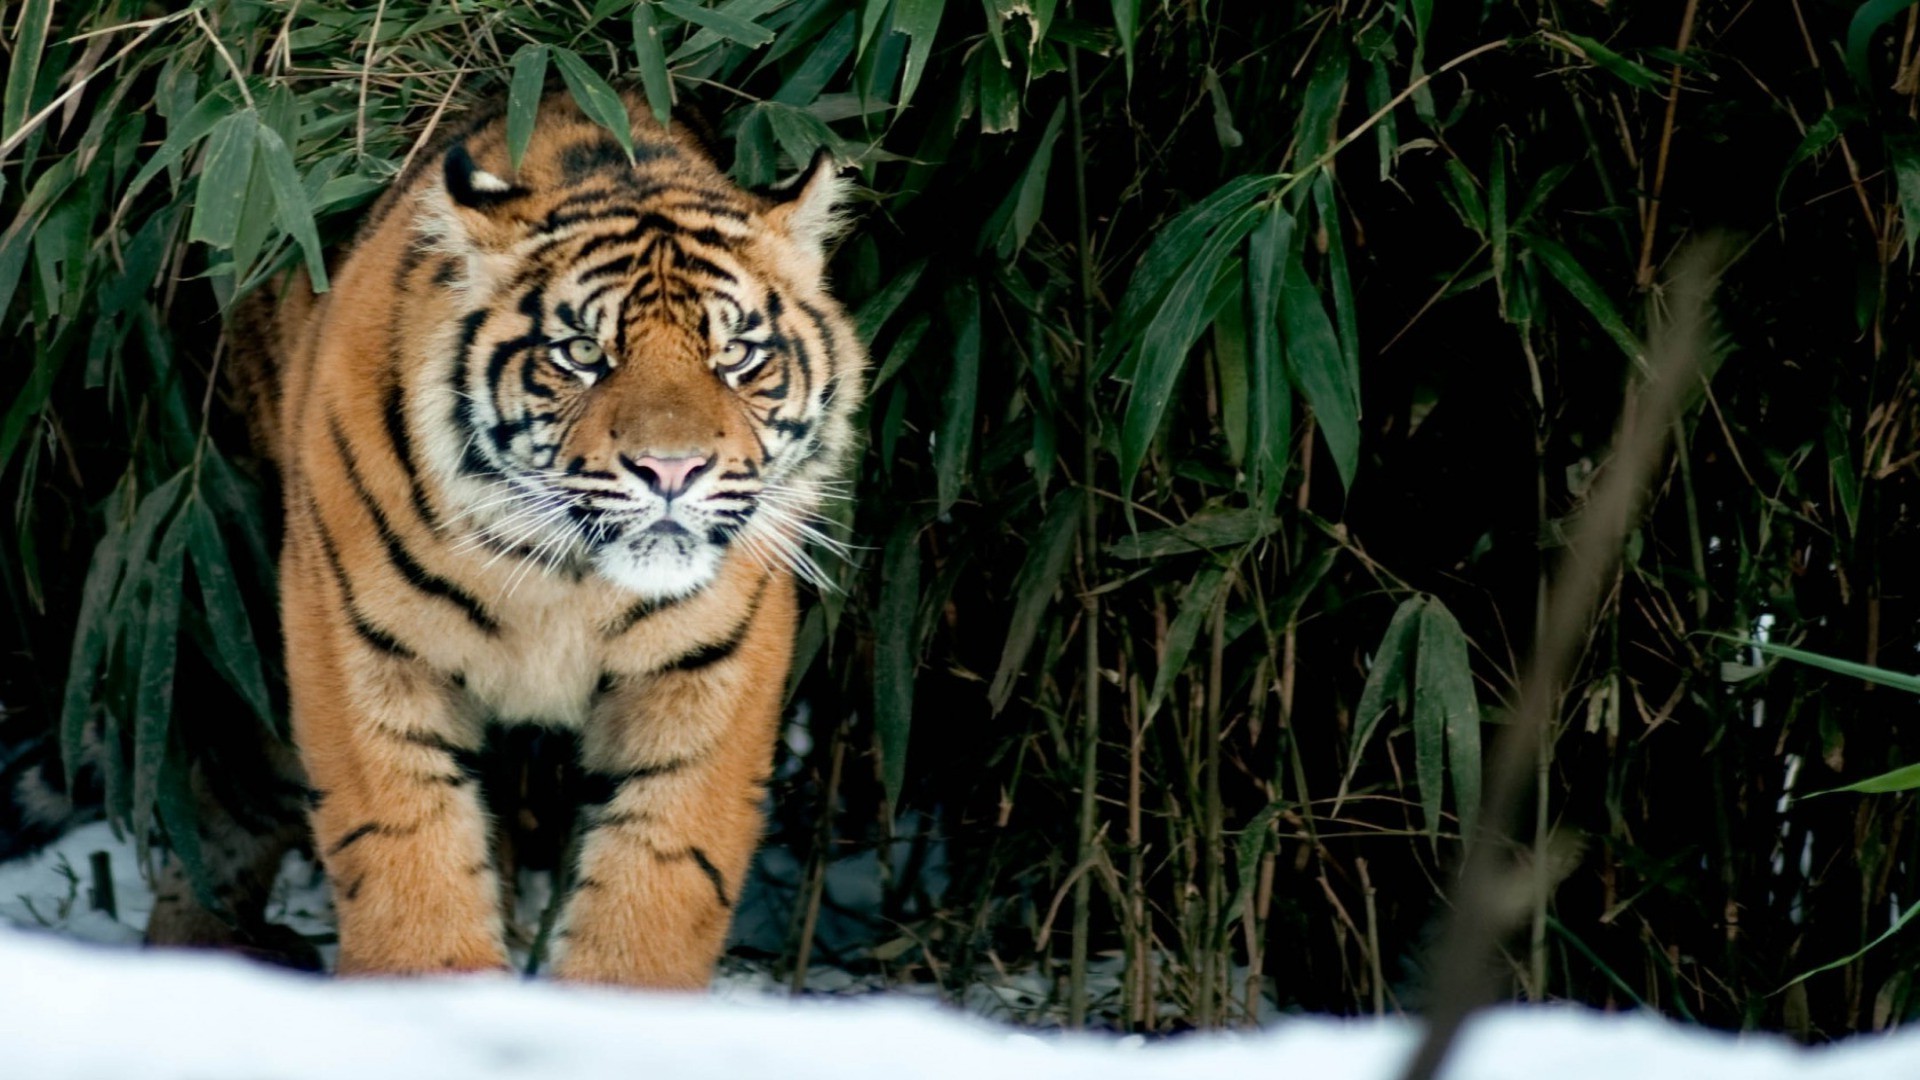 tigers wildlife cat tiger mammal predator jungle hunter danger carnivore wild animal nature zoo big hunt safari fur eye staring